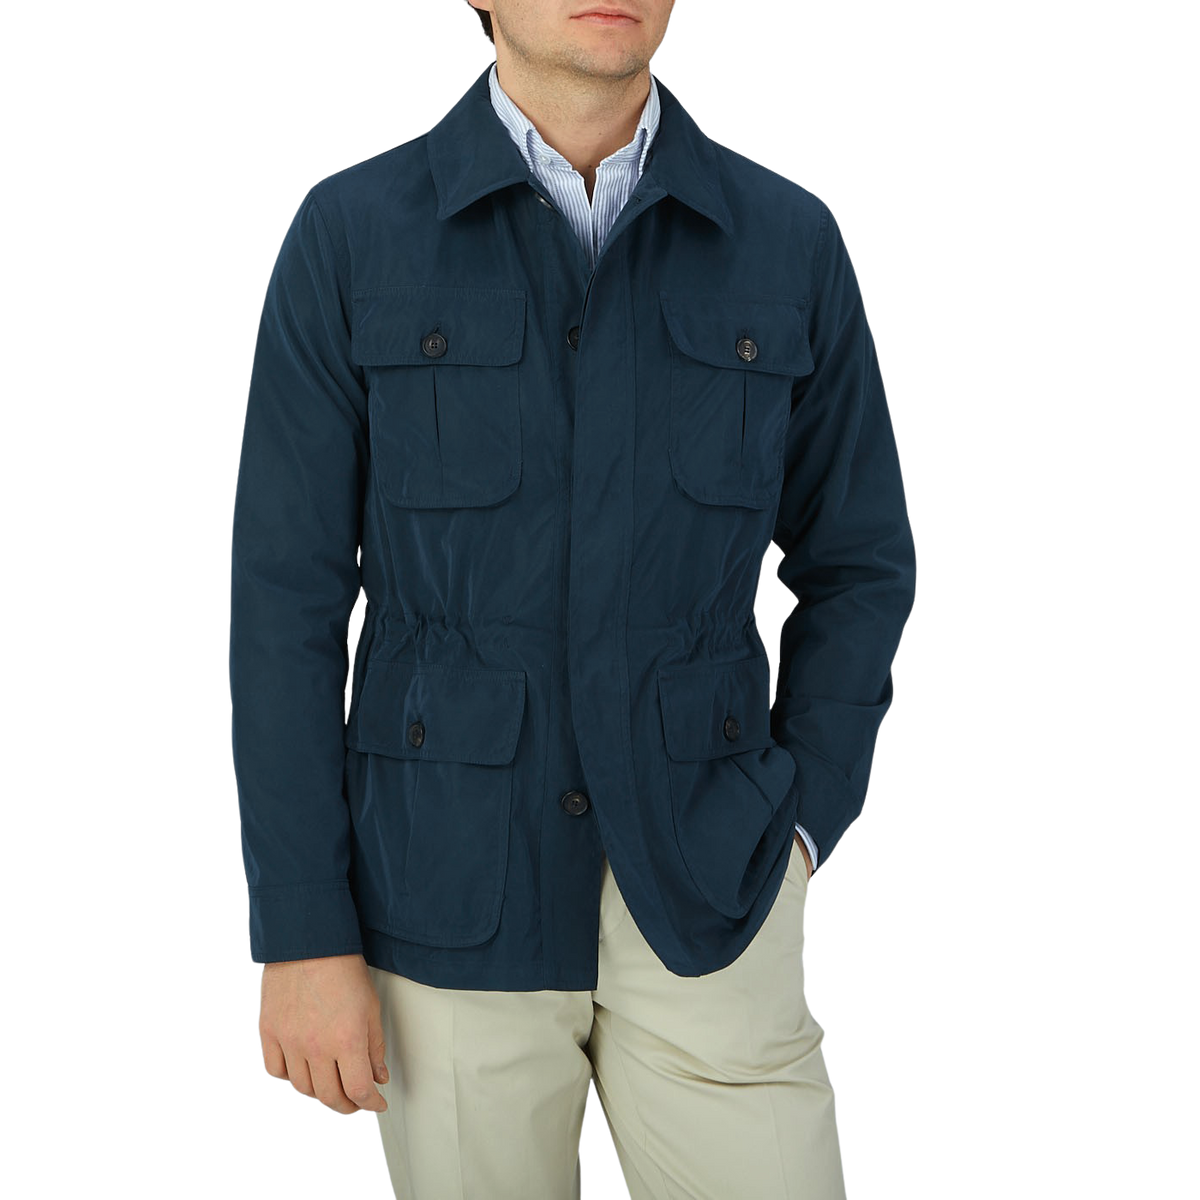 A man wearing a Manto Navy Blue Ultrafine Microfiber Safari Jacket and tan pants.